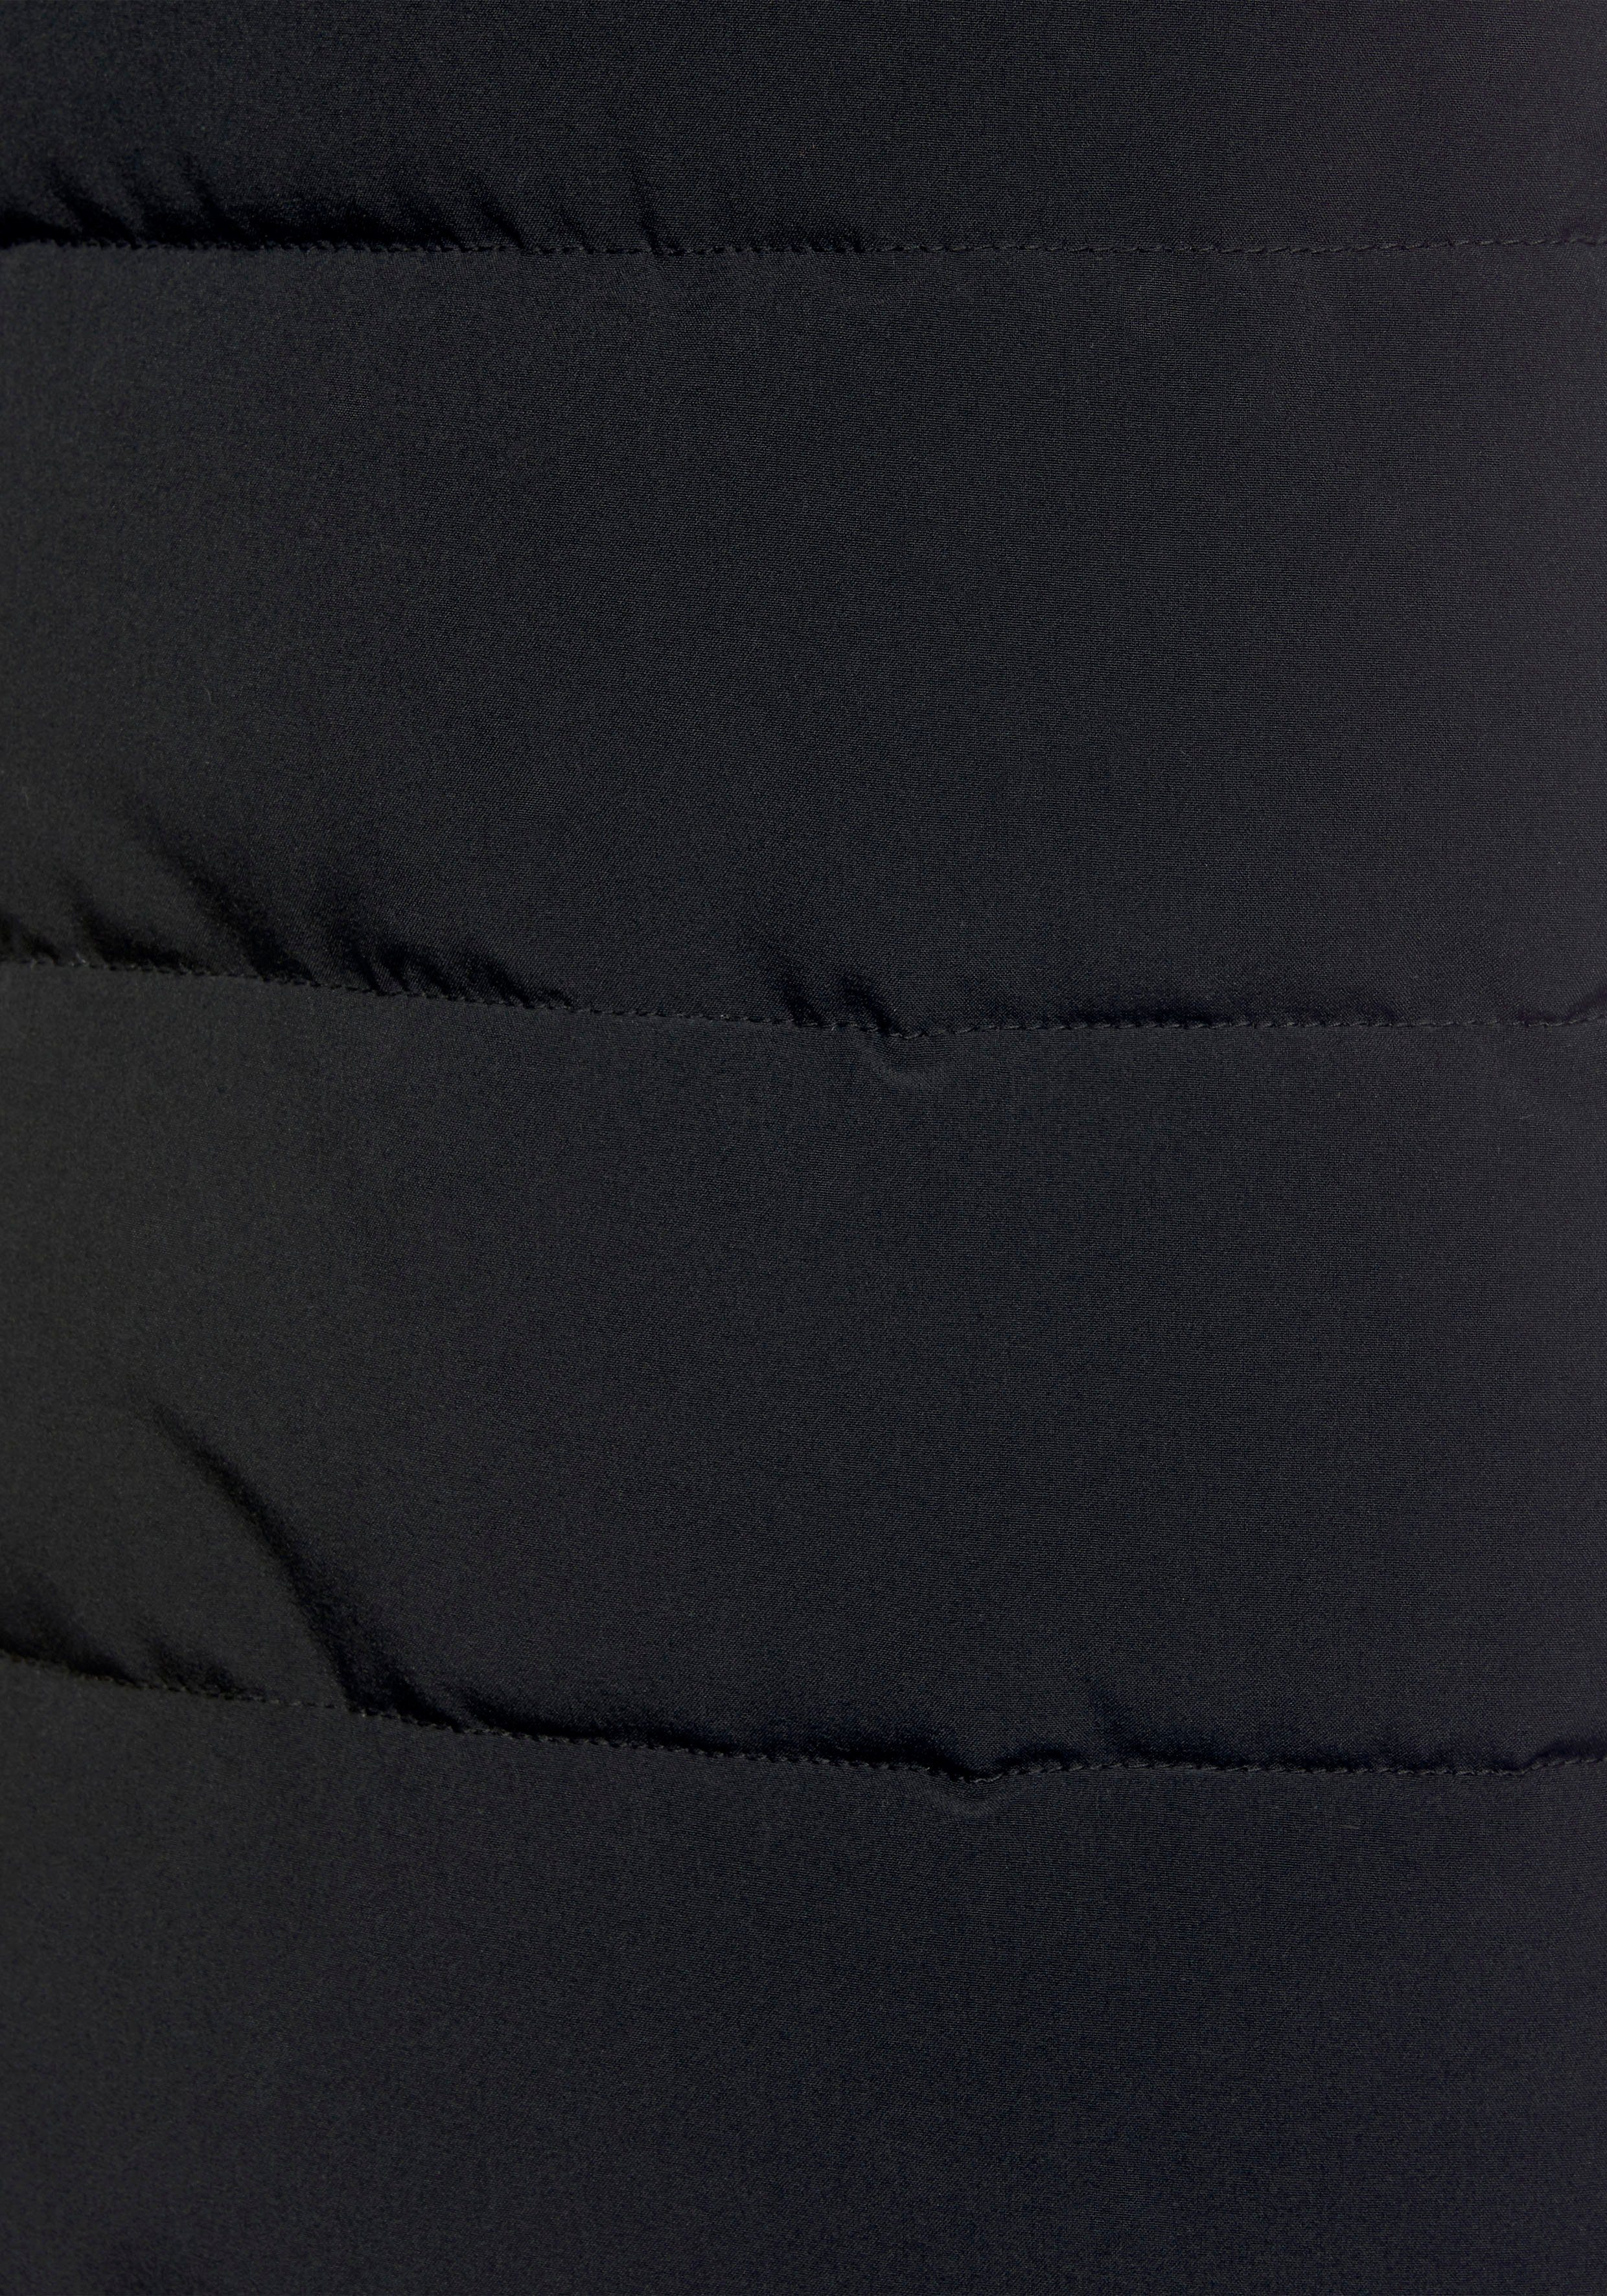 ALPENBLITZ Steppmantel dem mit auf long Gürtel abnehmbarer black Mantel & aus (Jacke nachhaltigem Material) Kuschel-Kapuze Oslo Markenprägung